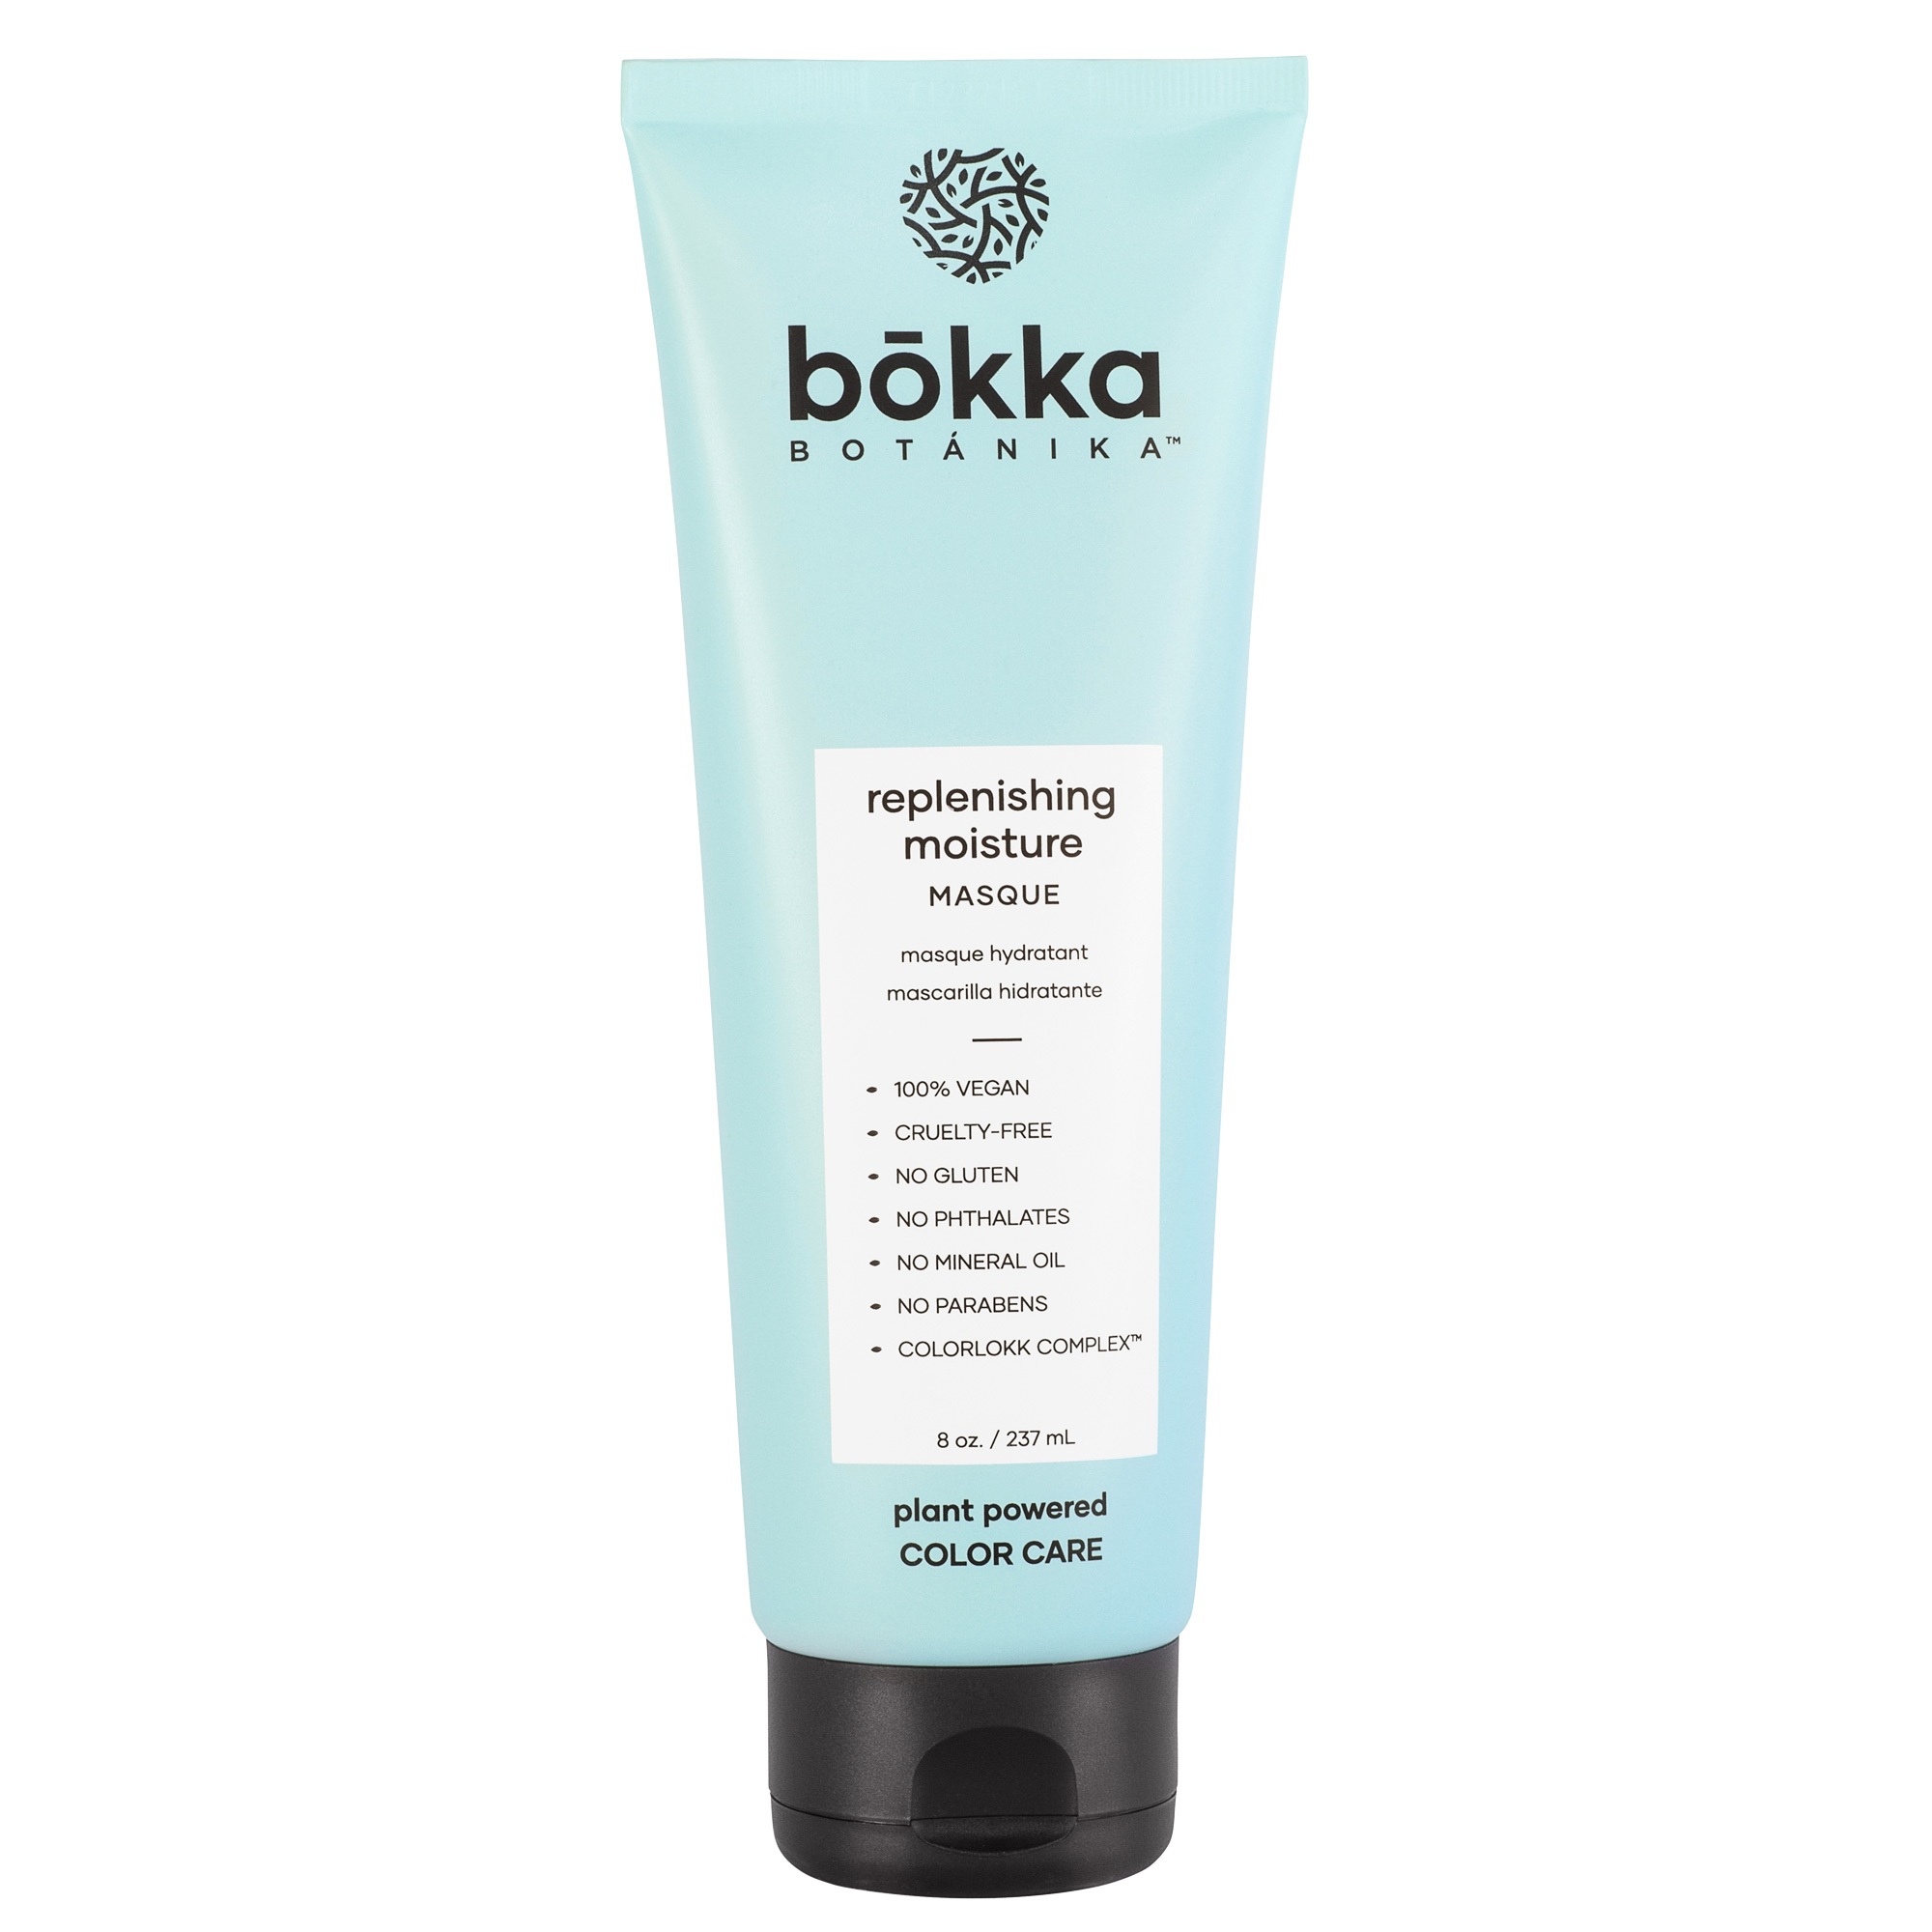 bokka BOTANIKA Replenishing Moisture Masque